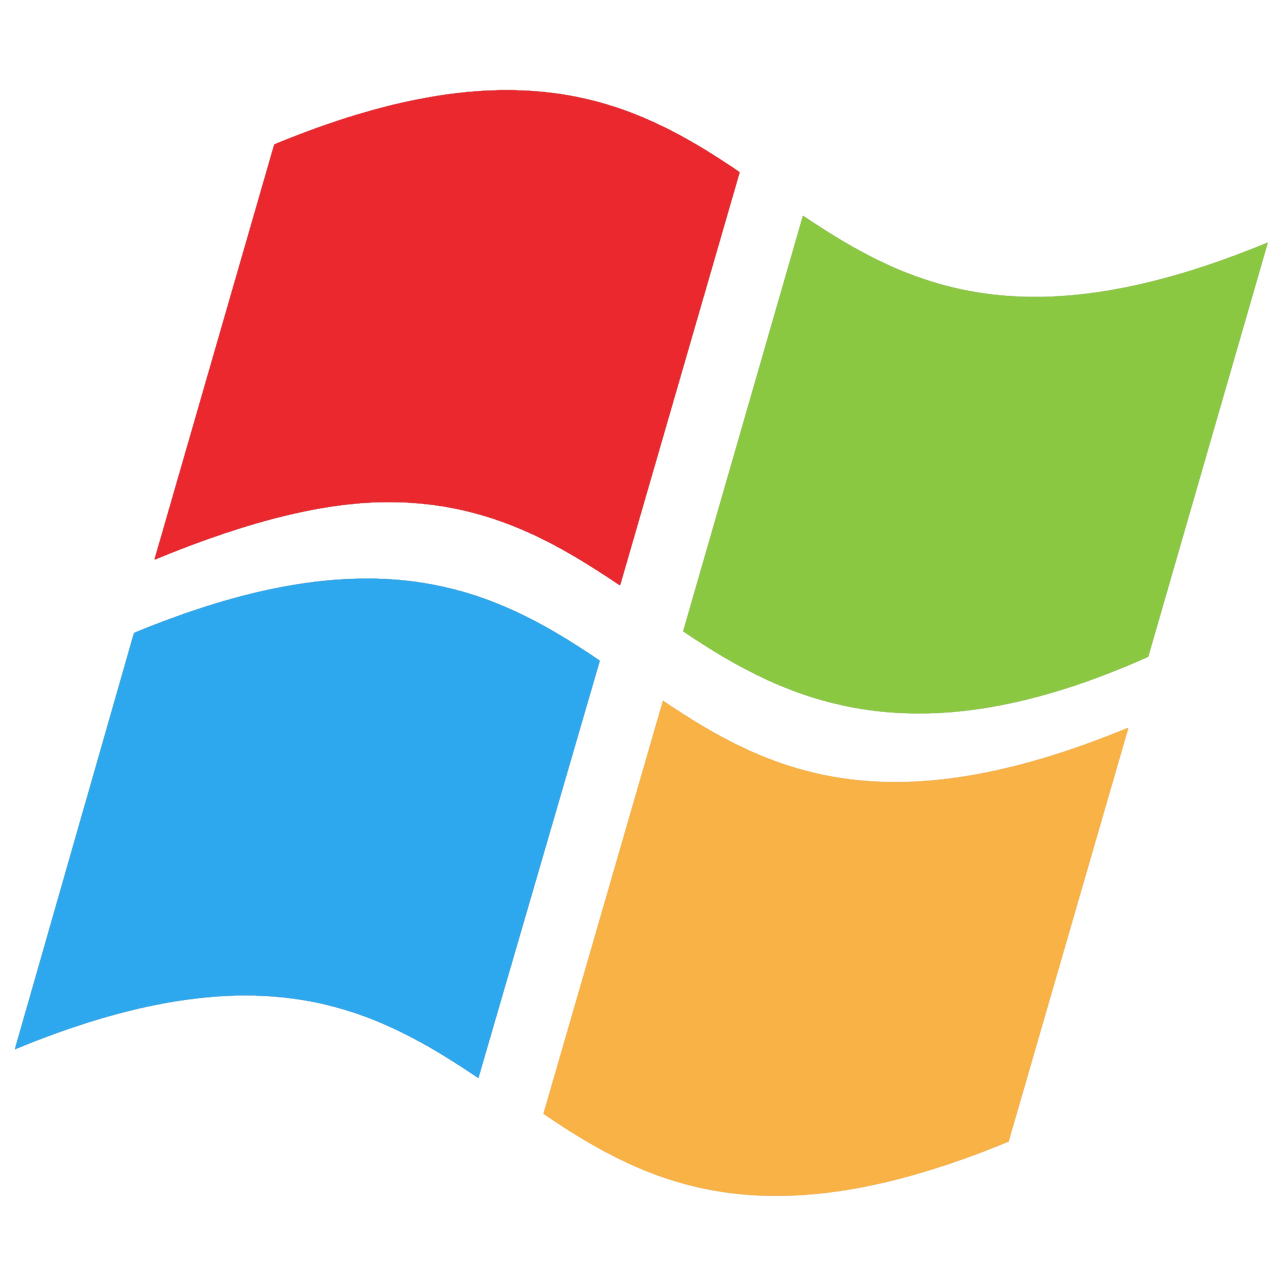 windows-developer-preview-logo-by-deviantarttlereal-on-deviantart